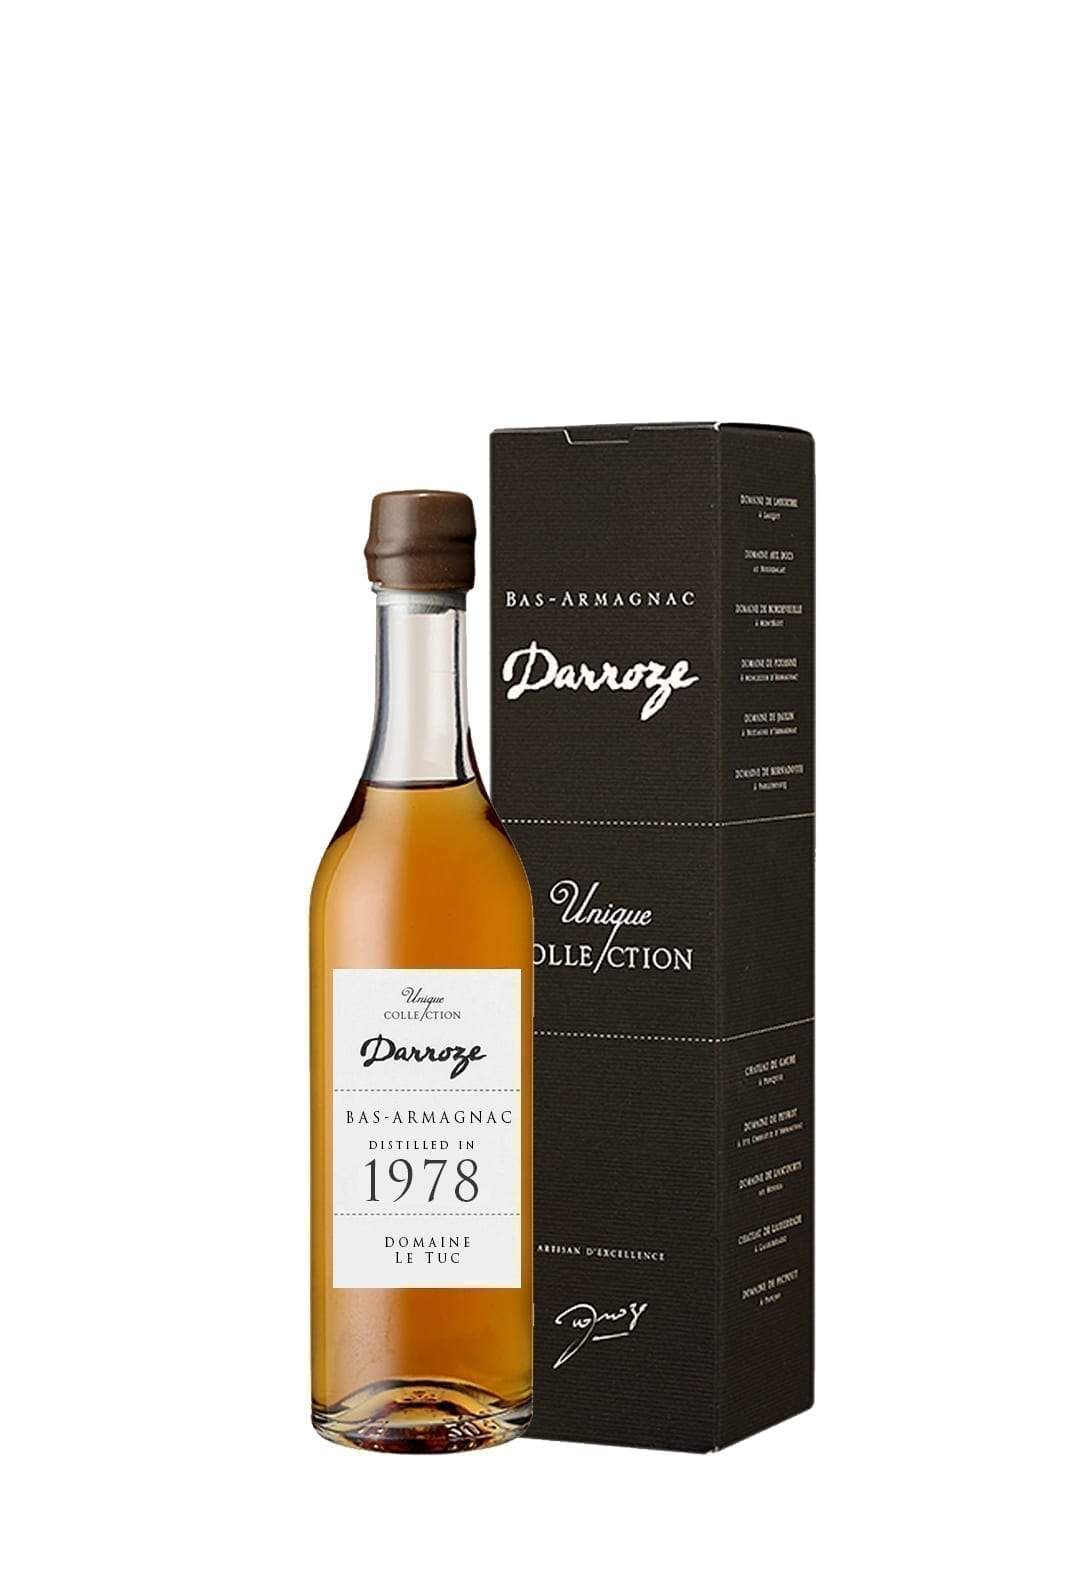 Darroze 1978 Le Tuc Armagnac 49.4% 200ml | Brandy | Shop online at Spirits of France